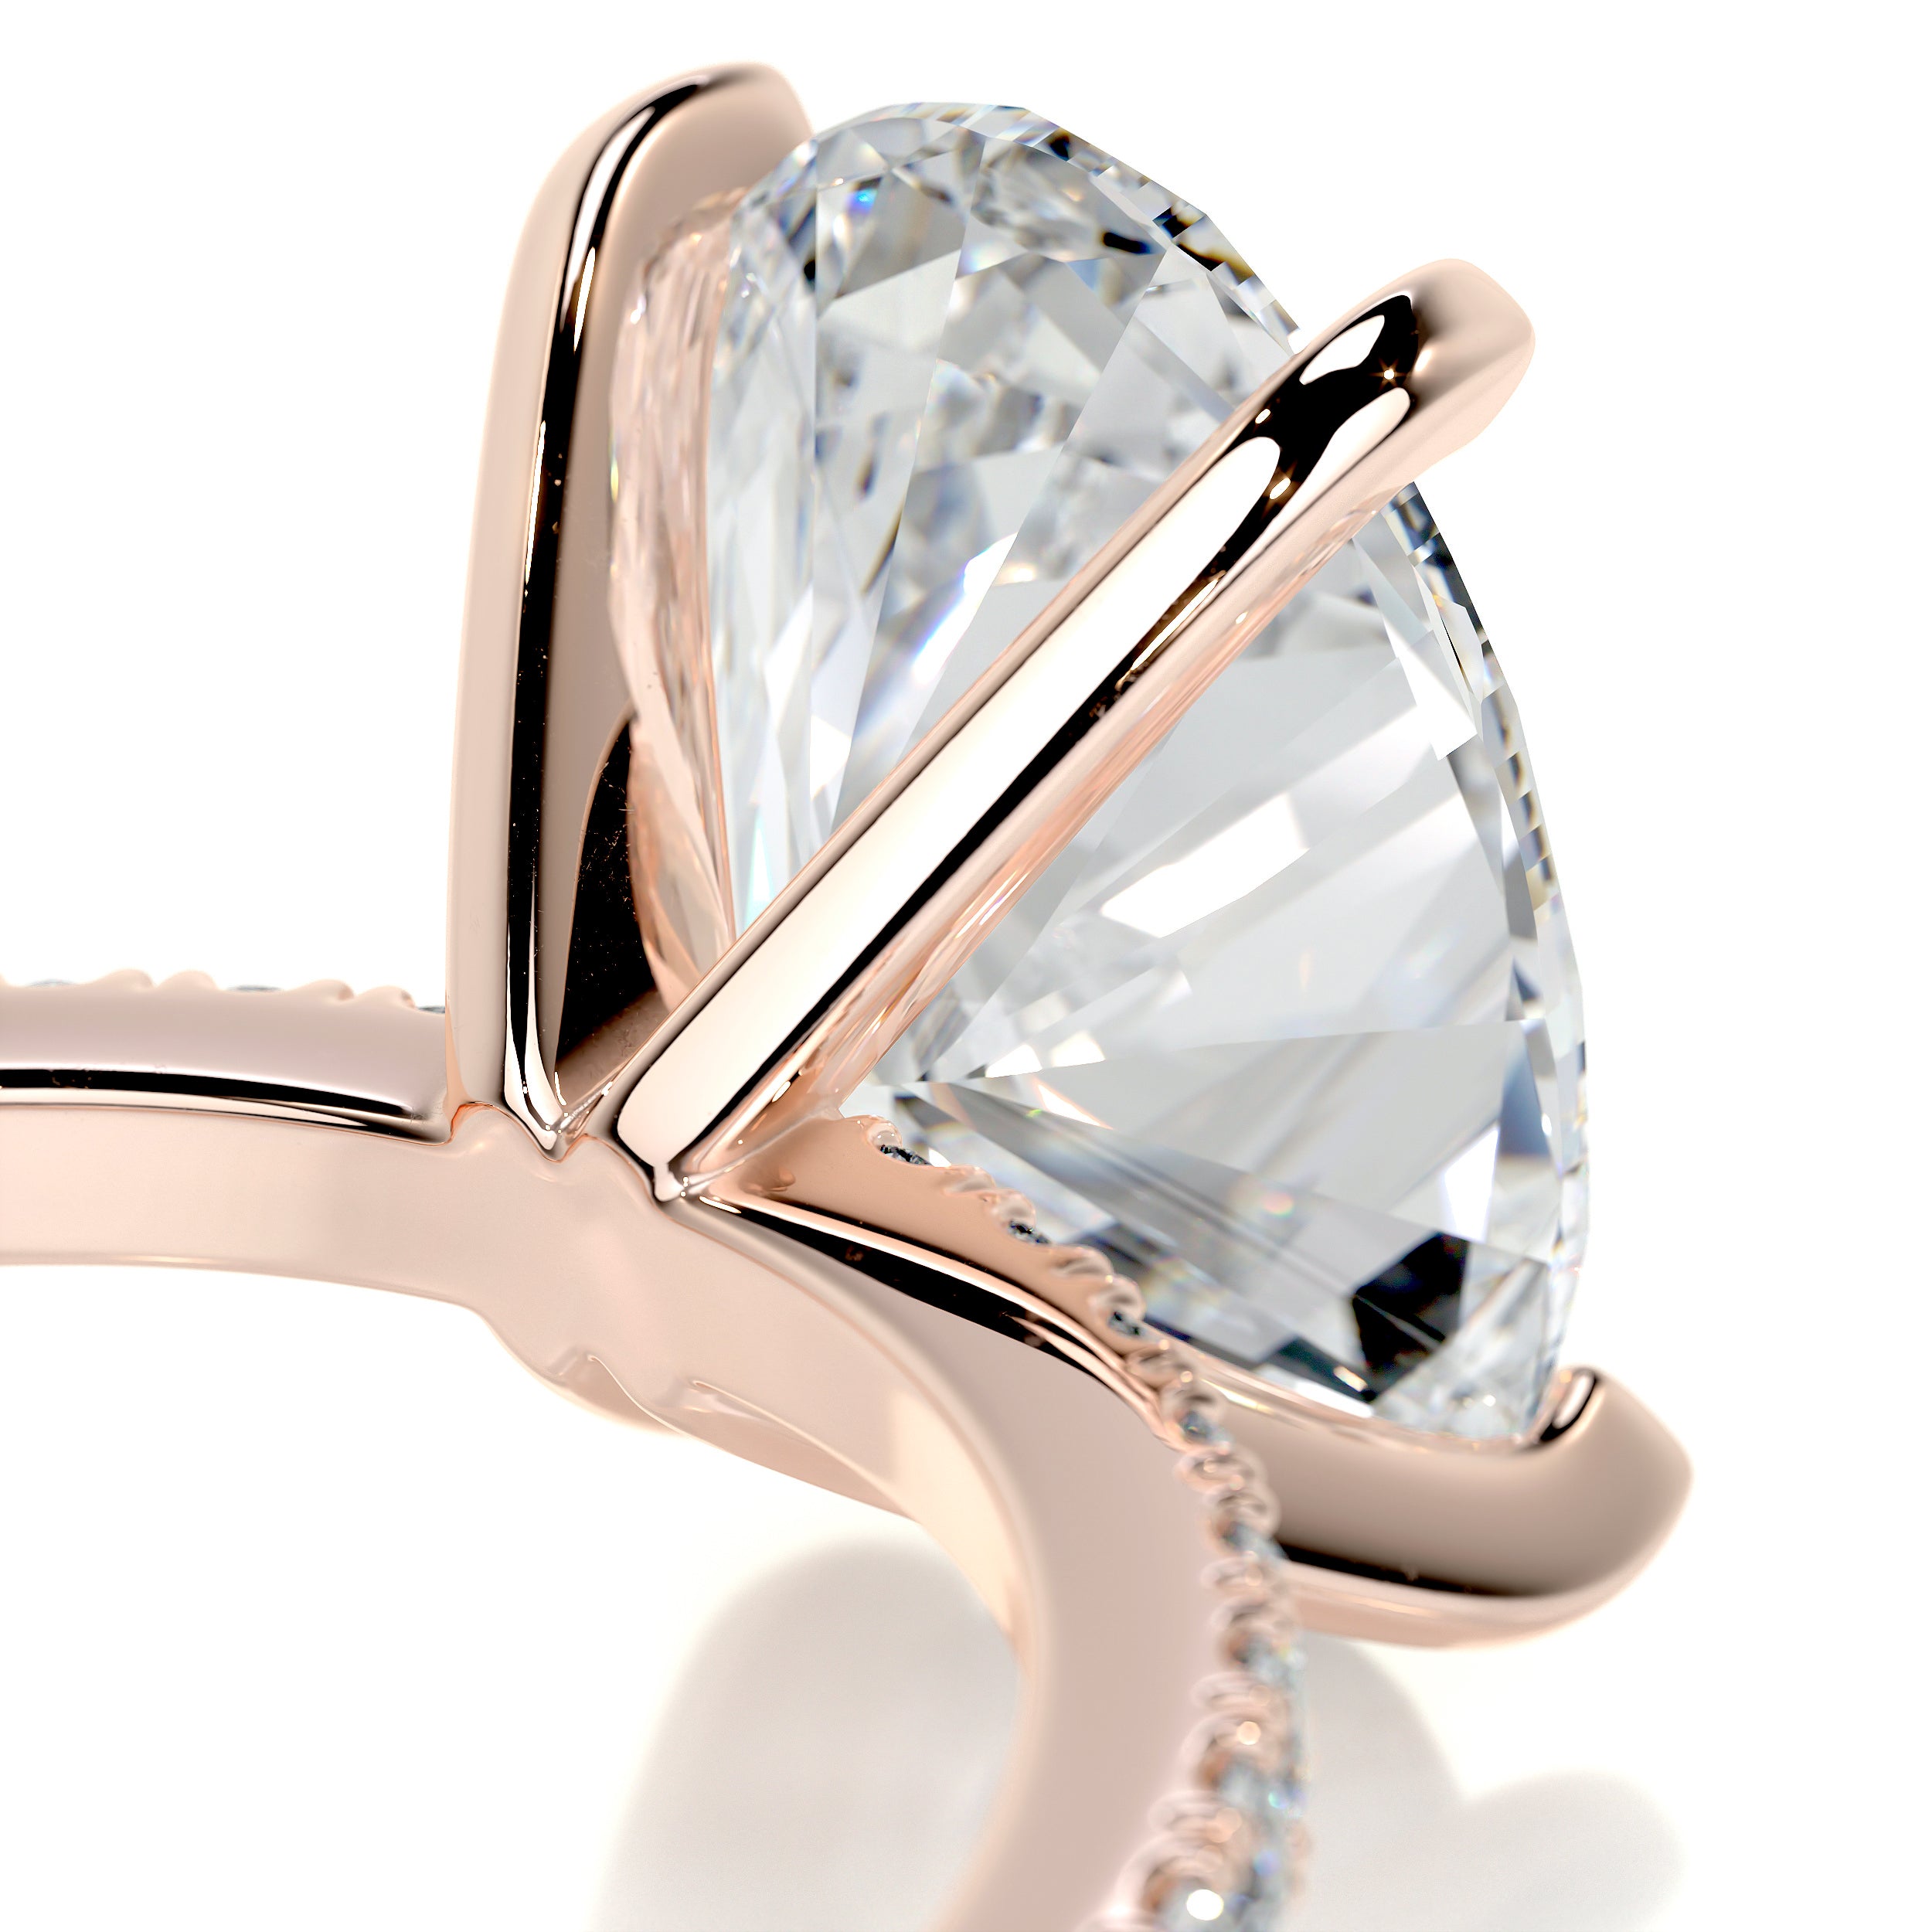 Stephanie Diamond Engagement Ring -14K Rose Gold